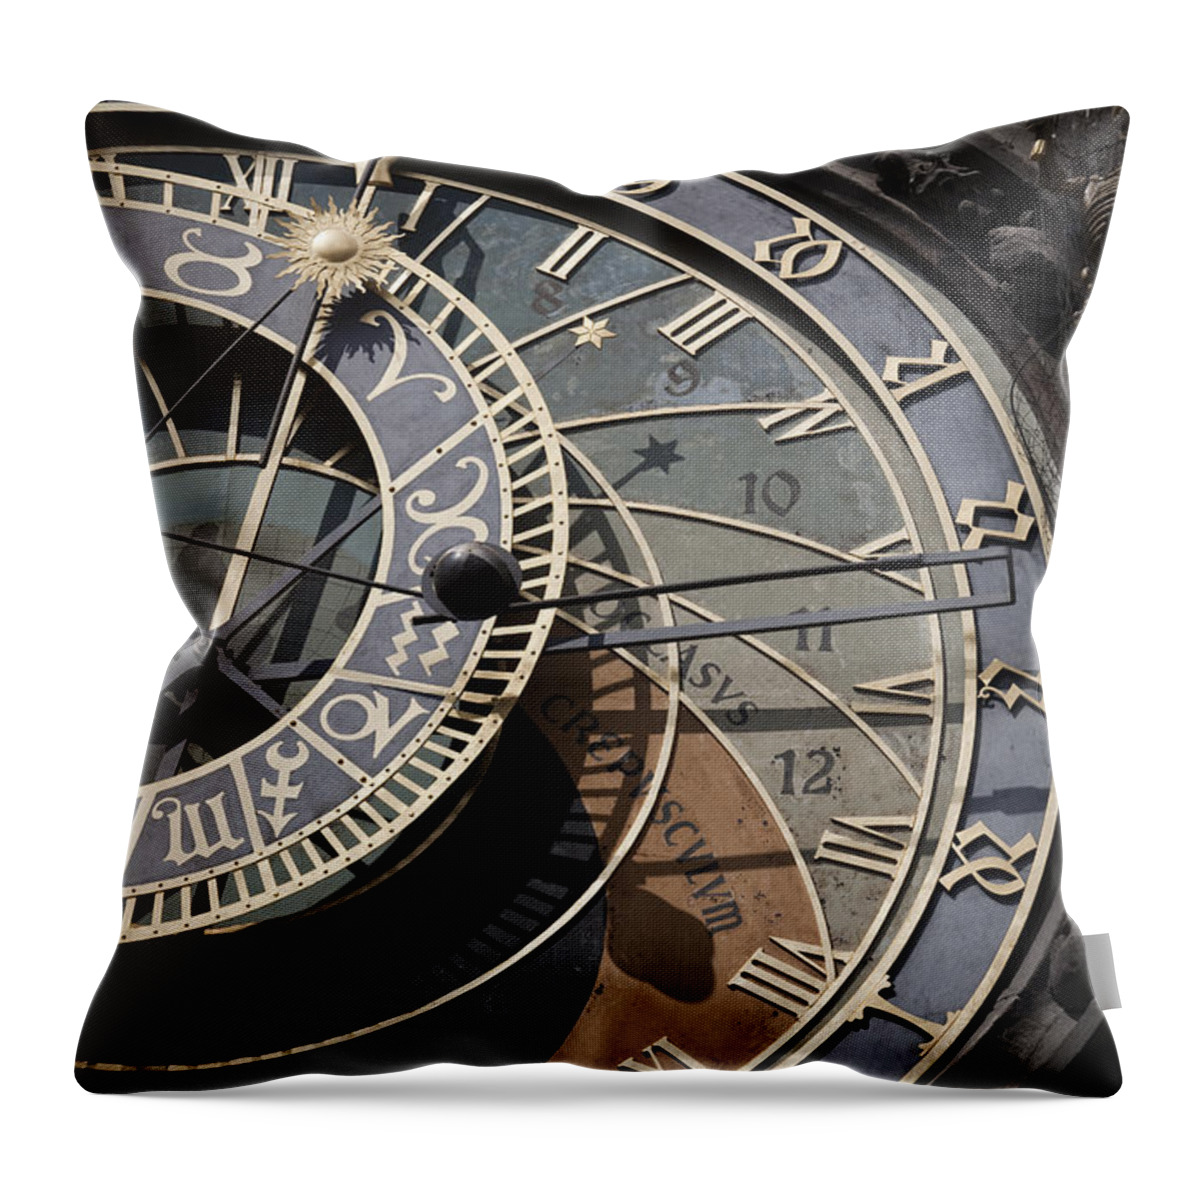 Czech Republic Throw Pillow featuring the photograph Astronomical Clock Prague #3 by Maria Heyens